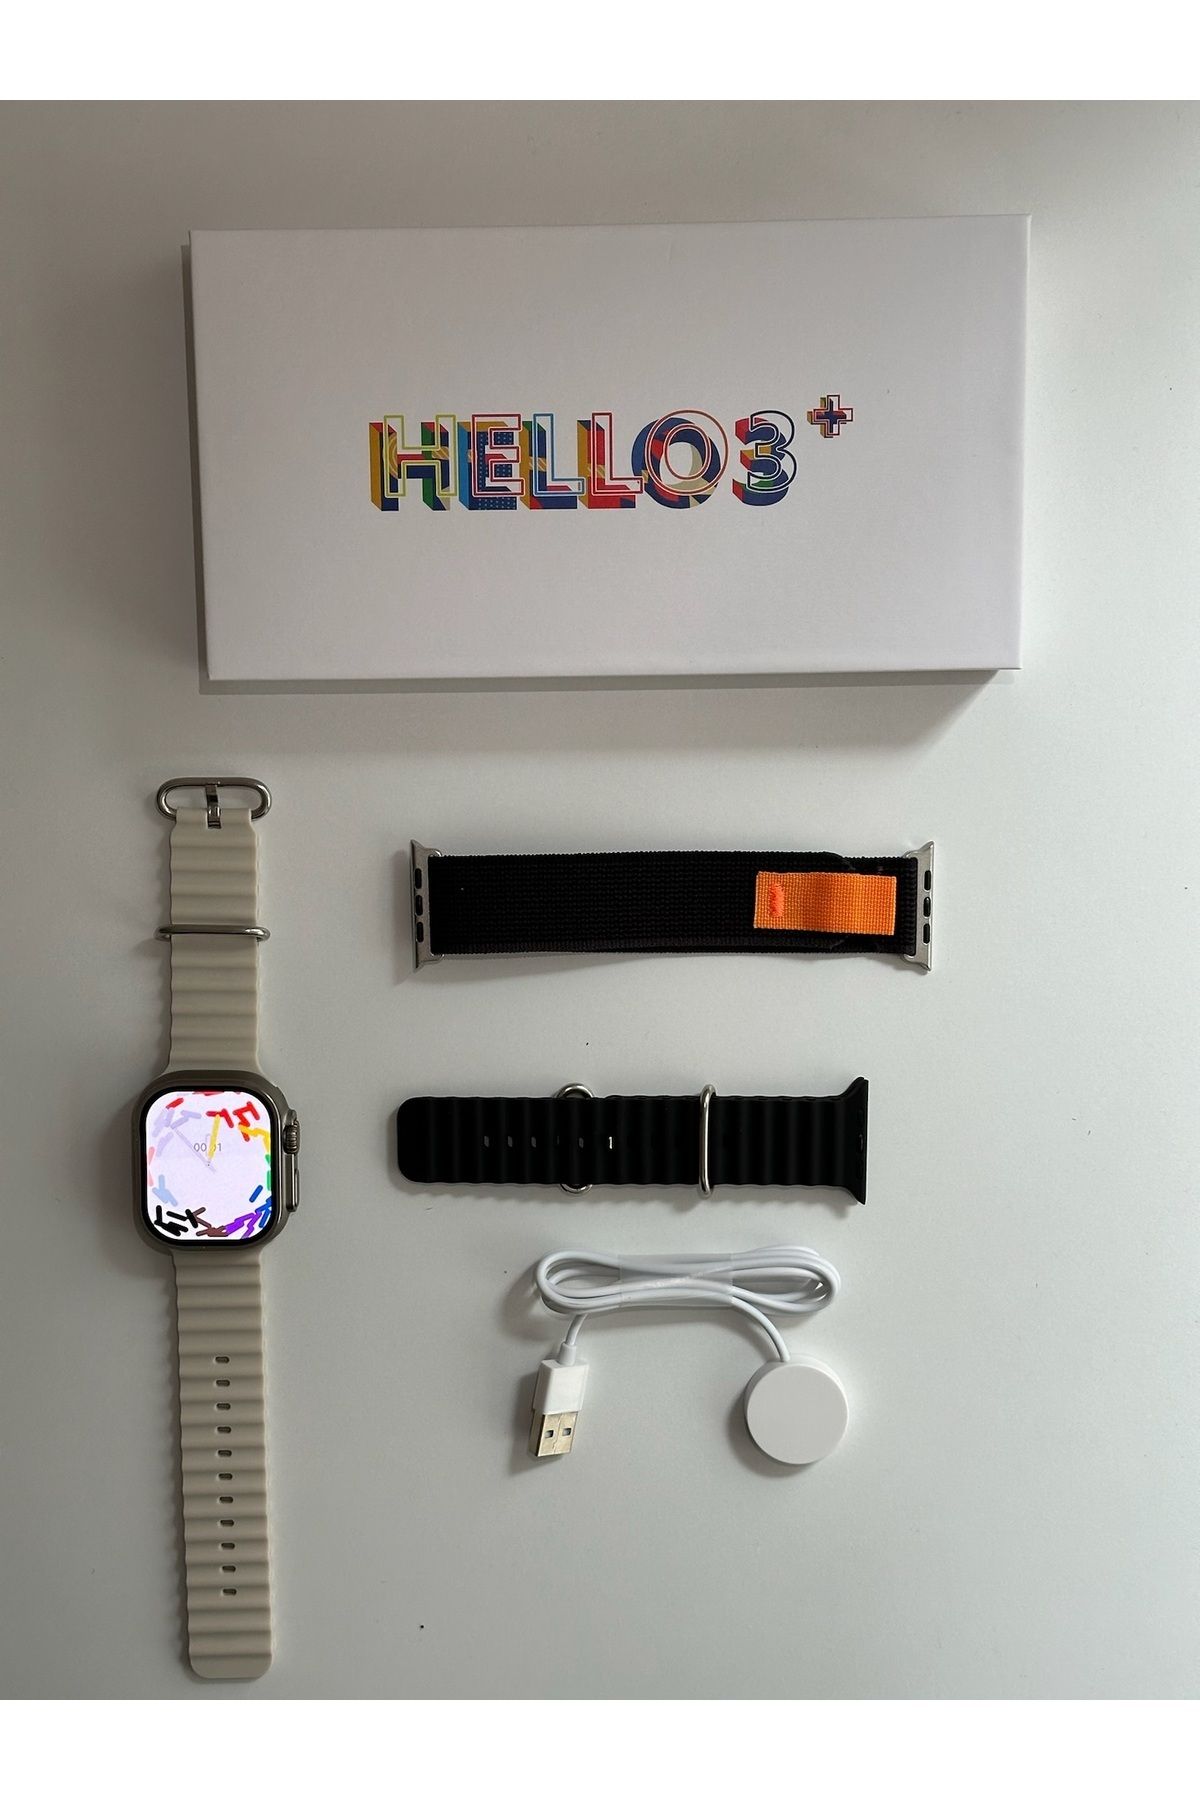 teknotrust İthalatçı Garantili Watch 8 Ultra Hello Watch 3+ Plus Amoled 4 GB Akıllı Saat Android + iOS 2" - 2.